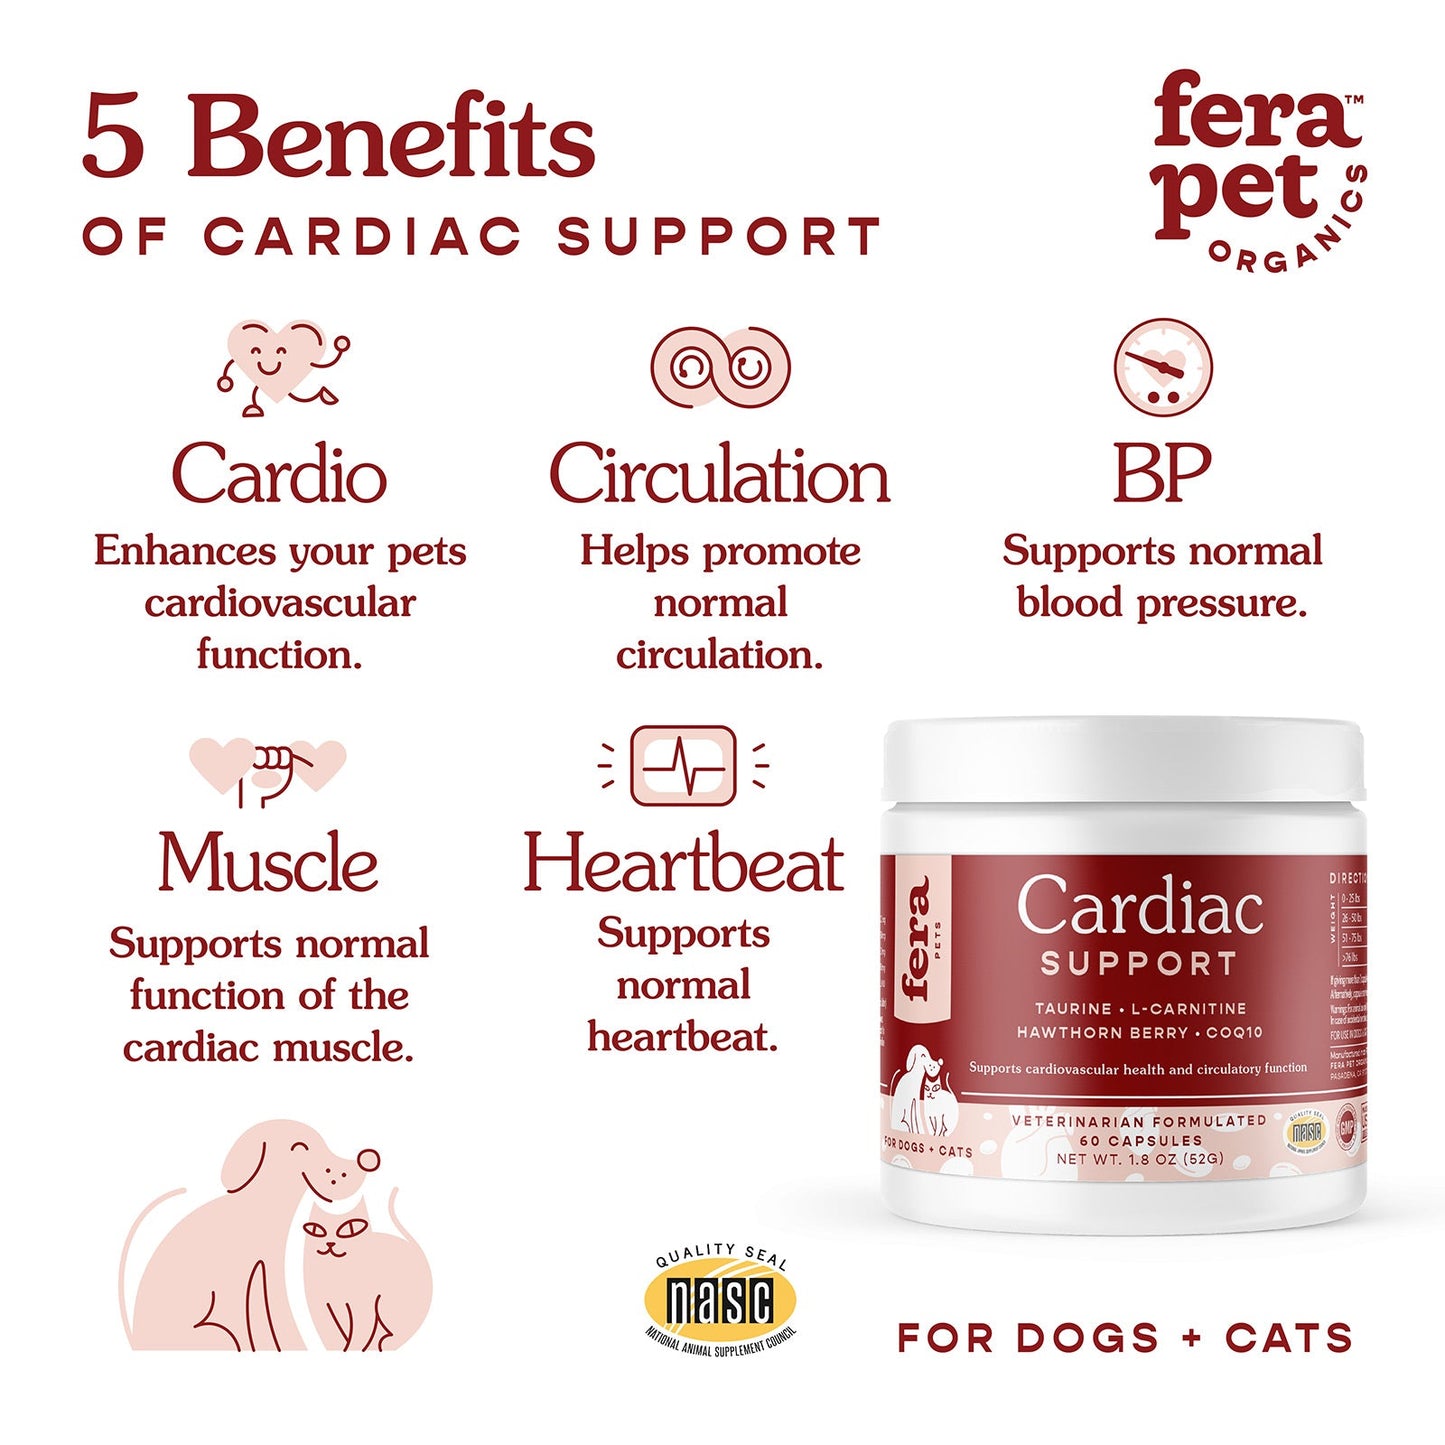 Fera Pet Organics Cardiac Support Supplement for Dogs & Cats, 1.8oz